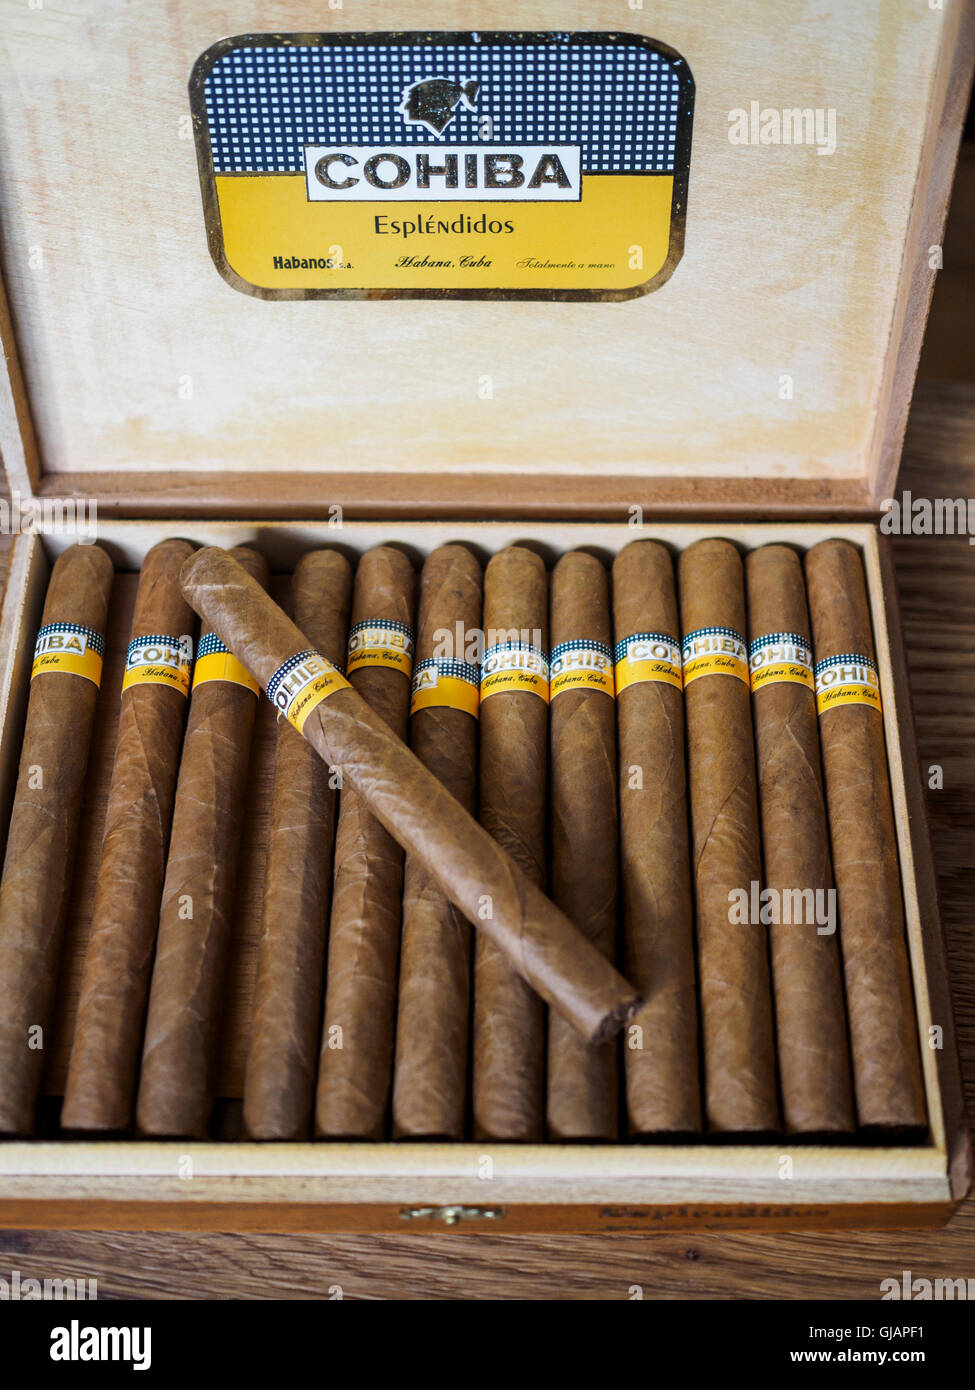 Sigaro cubano scatola contenente Cohiba Esplendios sigari, fatta a mano in  Cuba Foto stock - Alamy